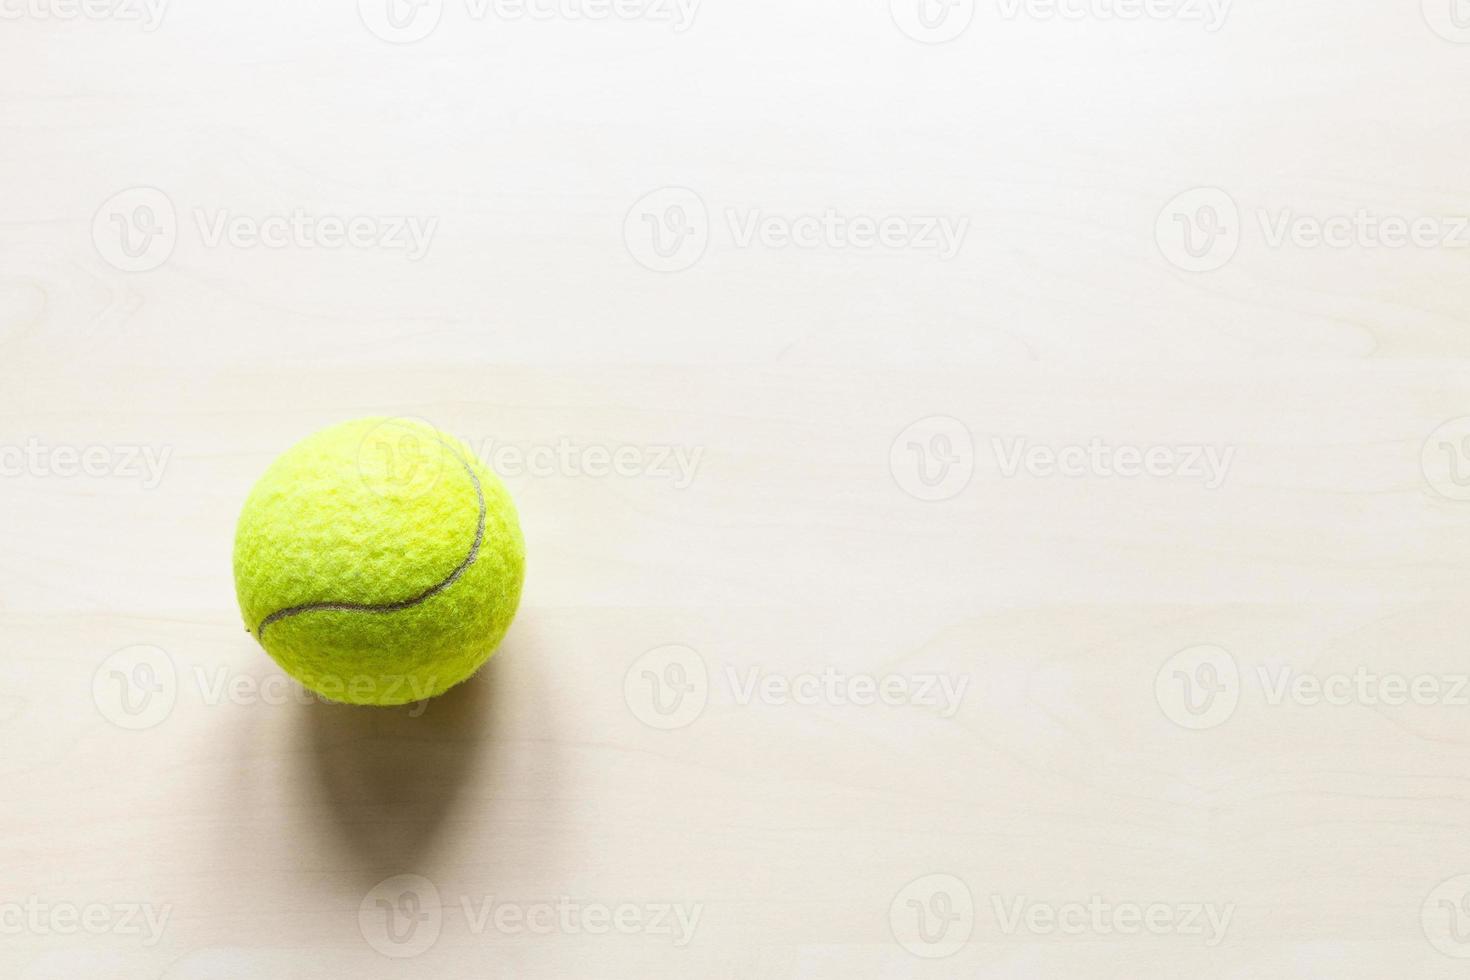 f tennis bal Aan licht bruin houten bord foto